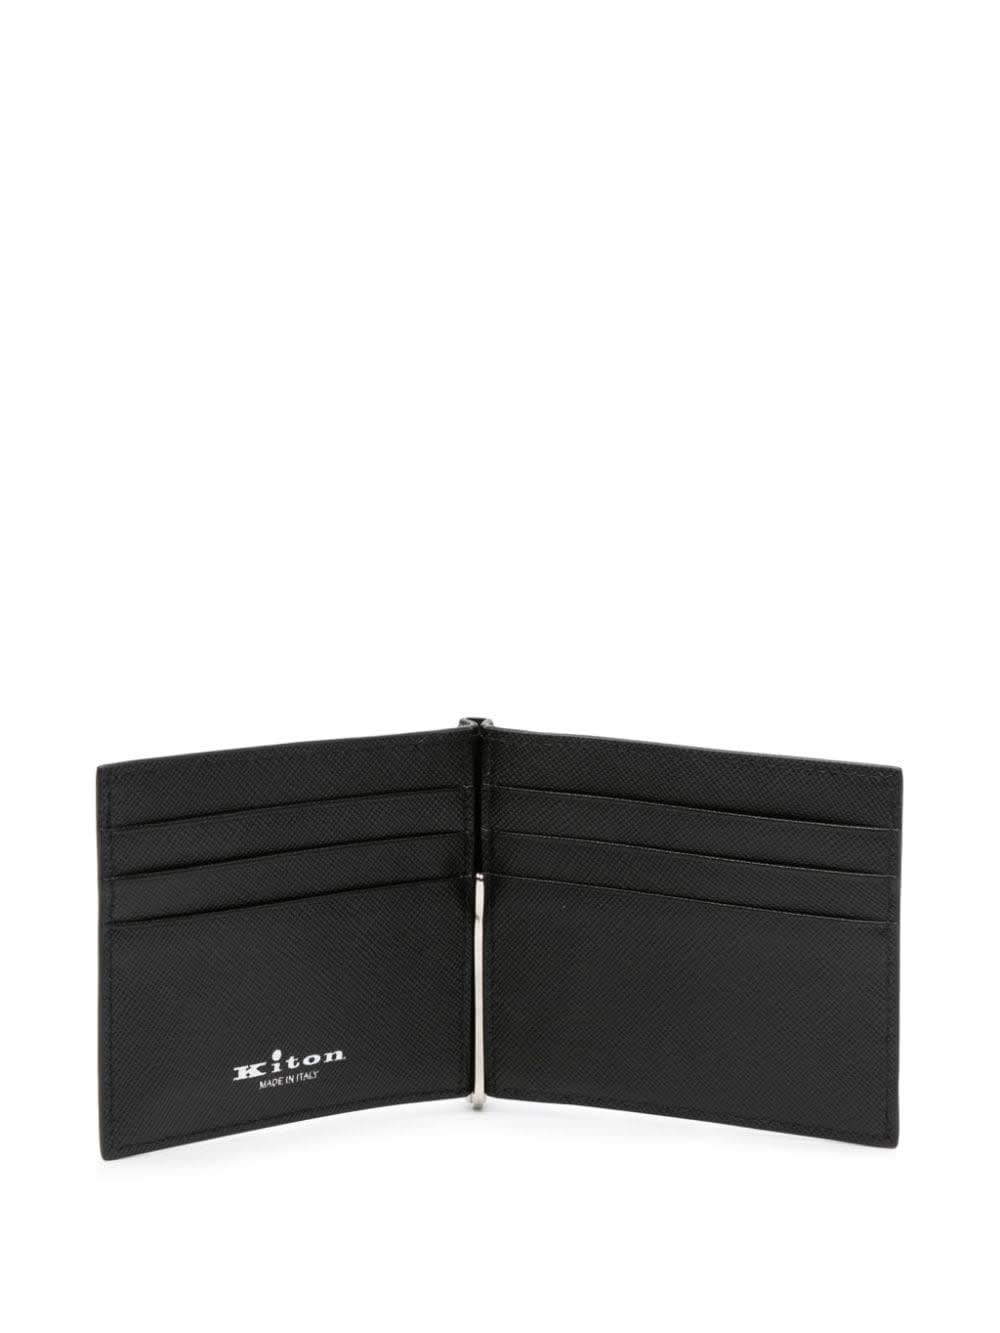 Black Leather Folding Card Holder With Logo